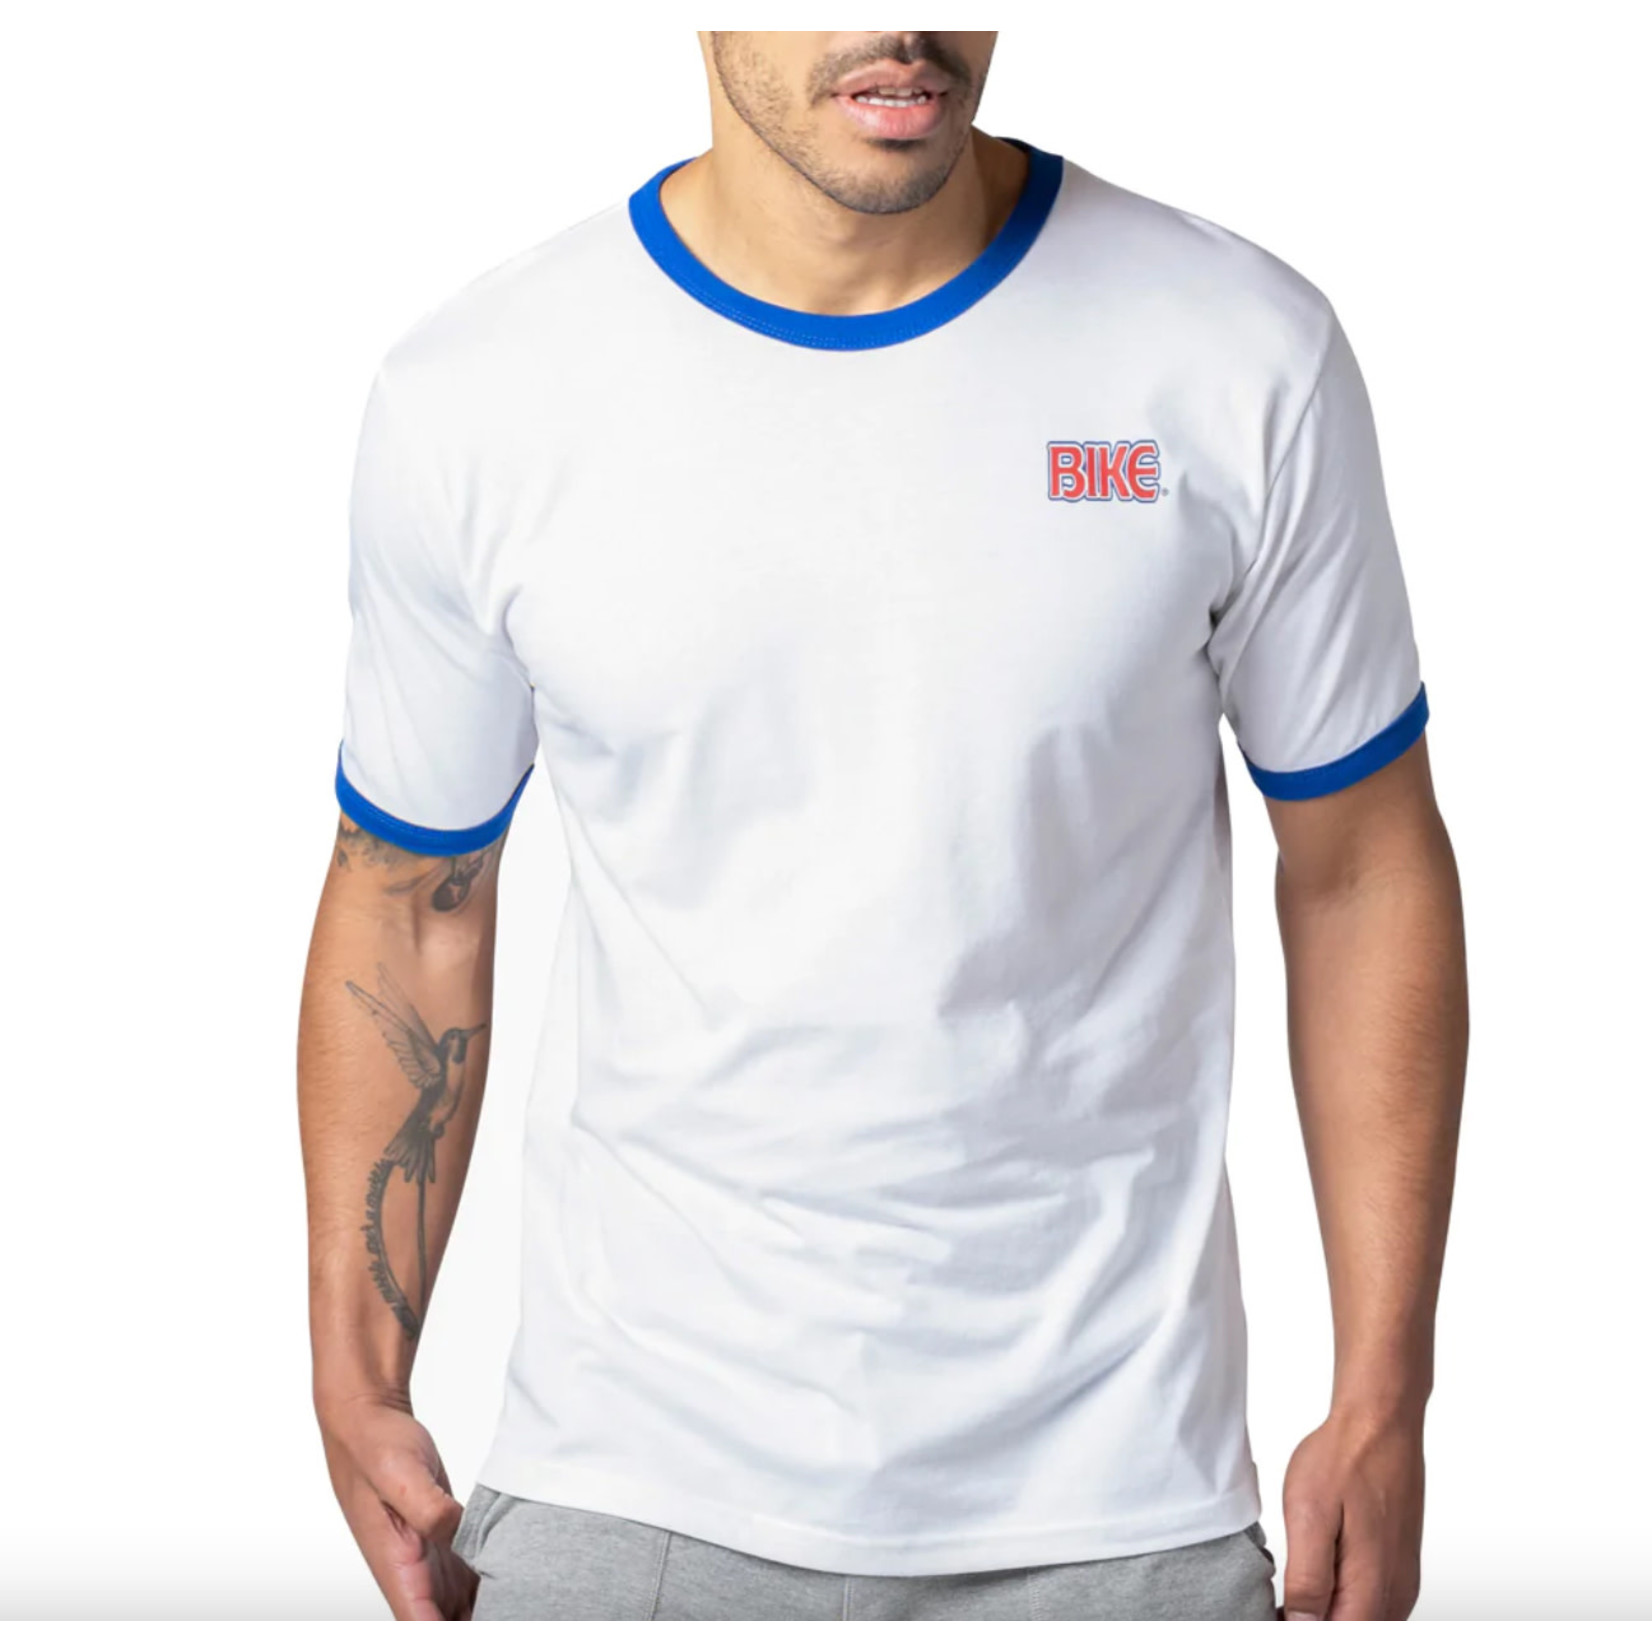 Bike Athletic BIKE Classic Ringer T-Shirt White/Blue